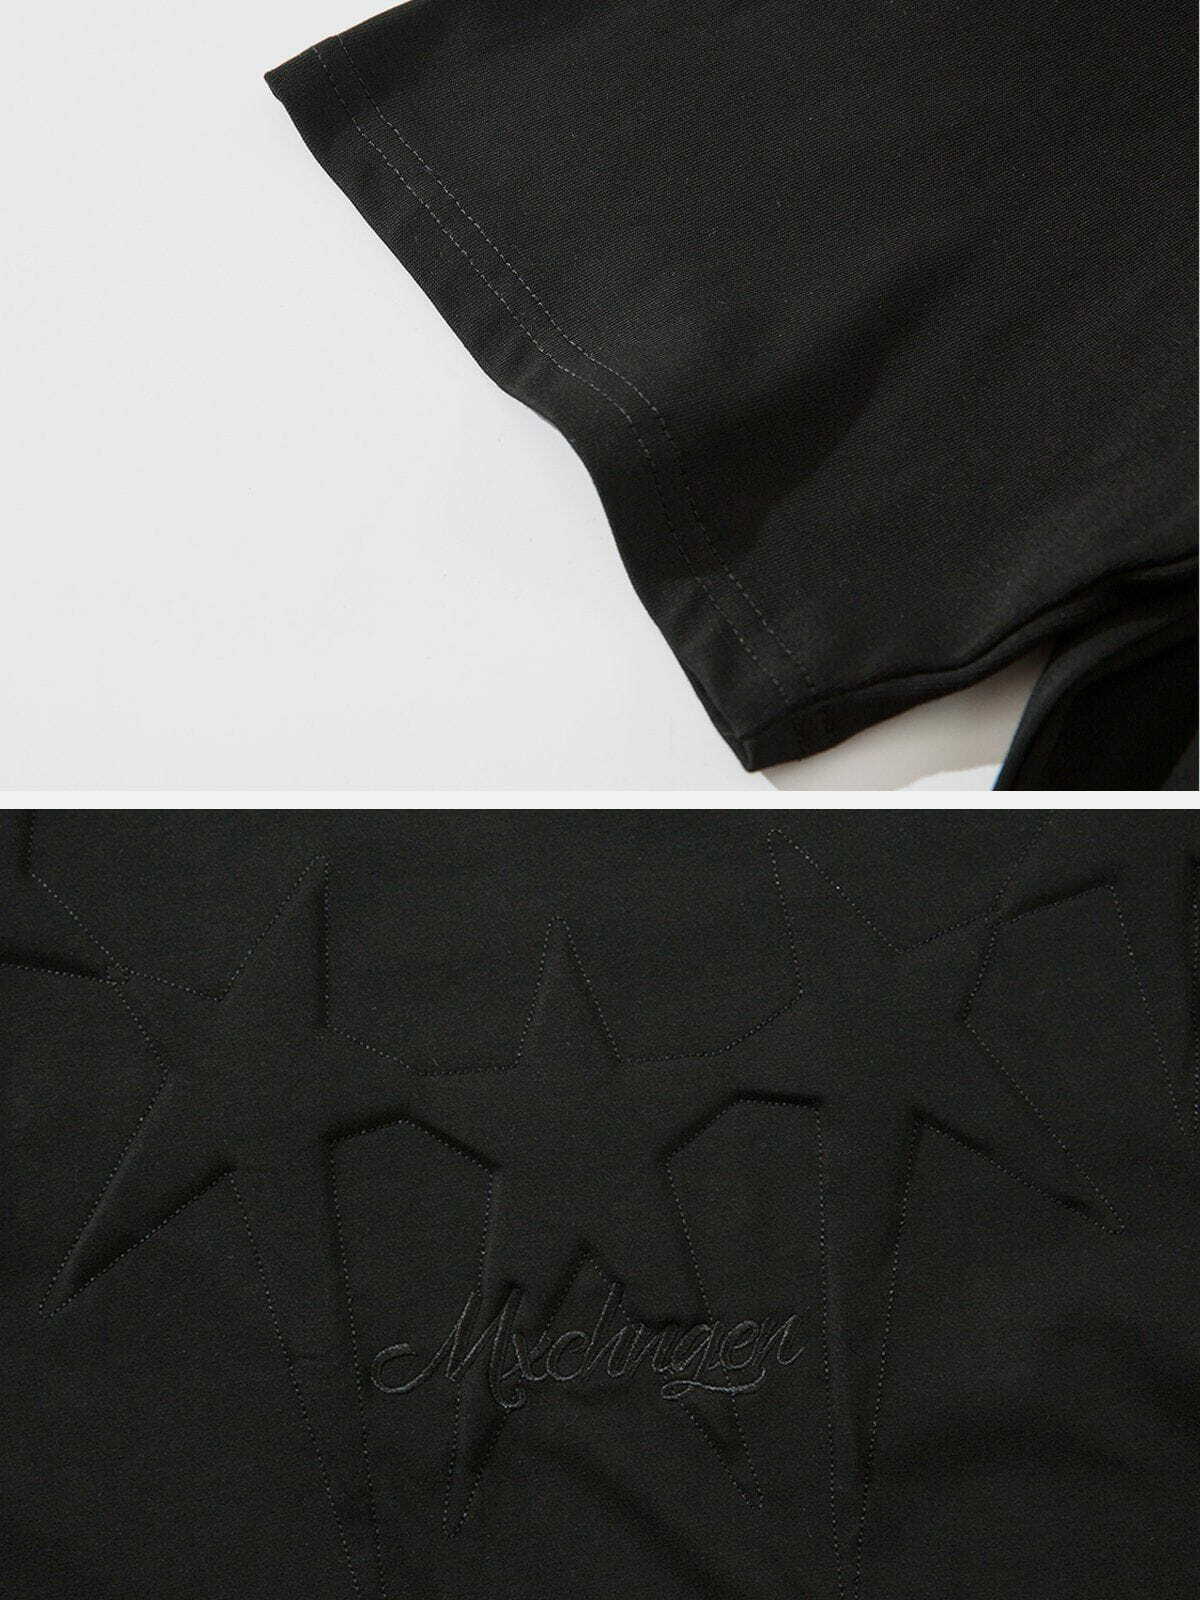 embroidered stars print tee edgy retro streetwear icon 4762